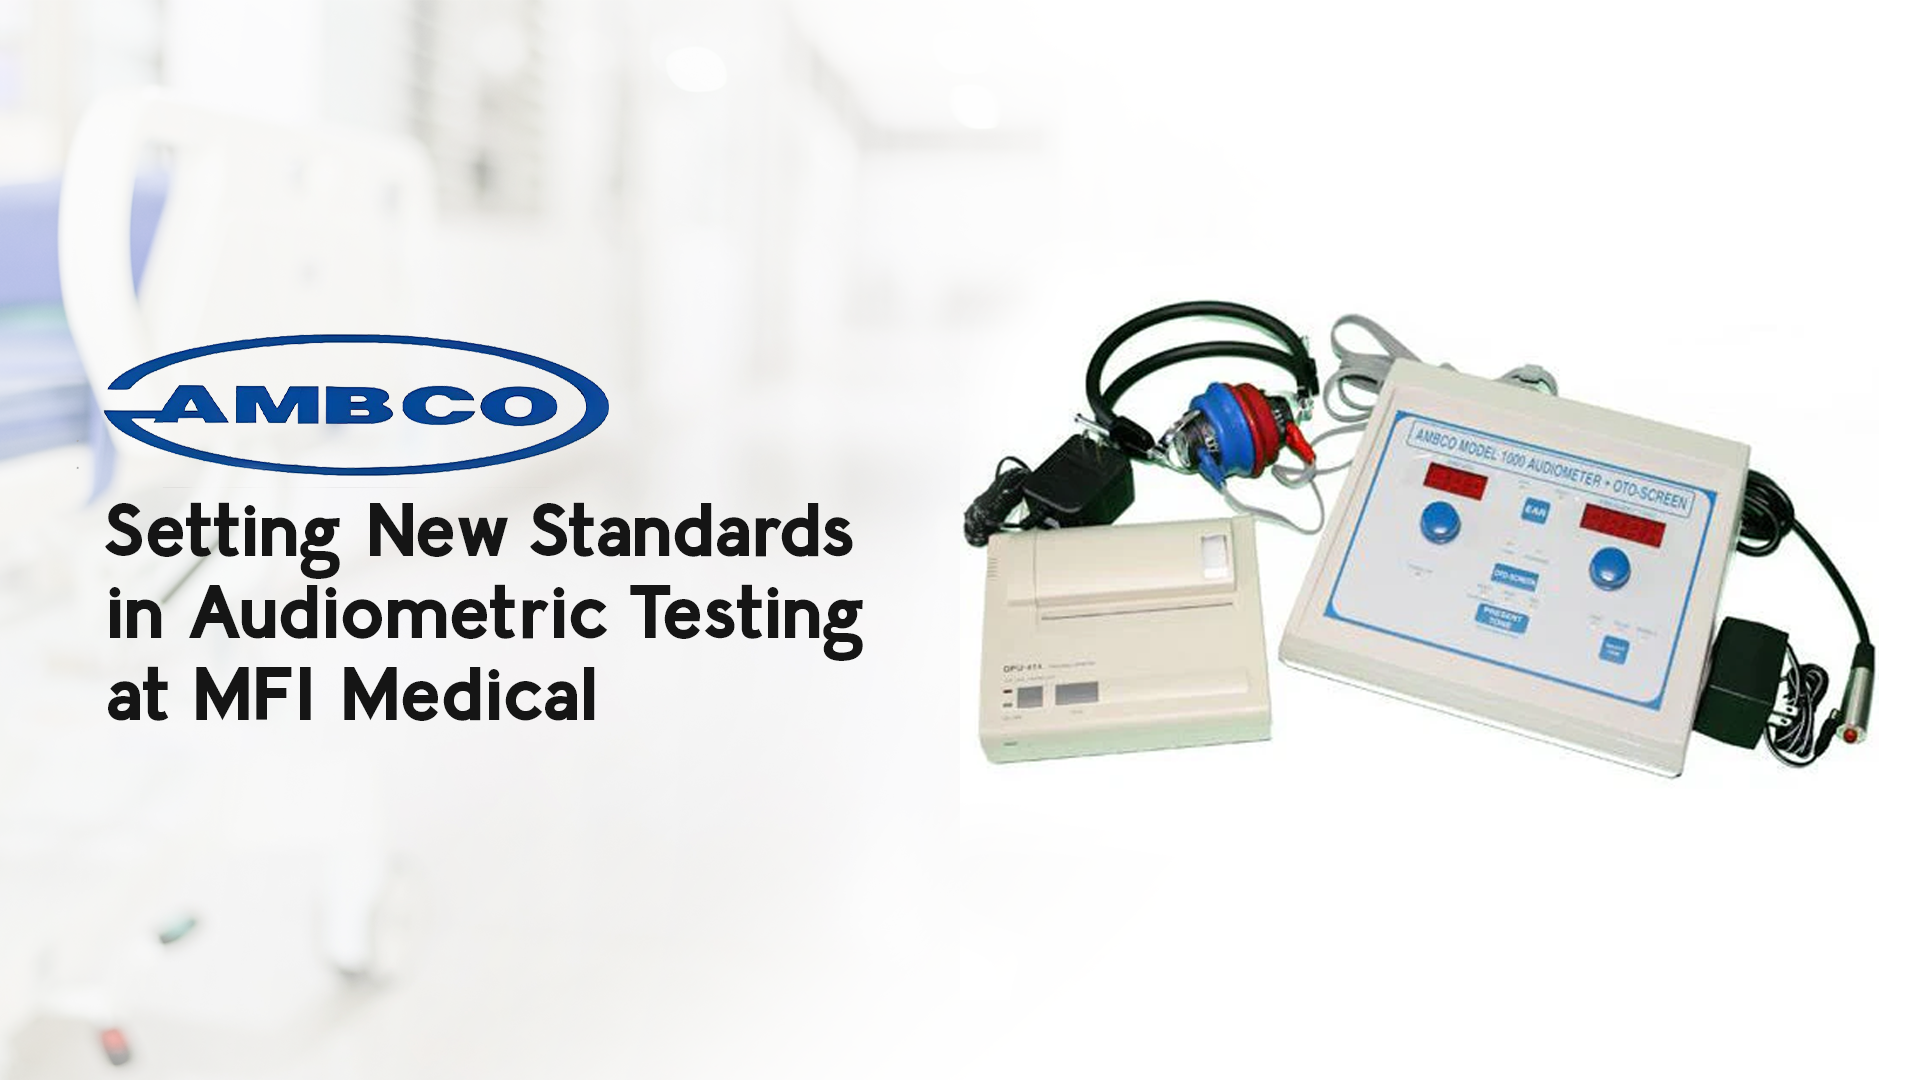 Ambco for Audiometric Testing at MFI Medical